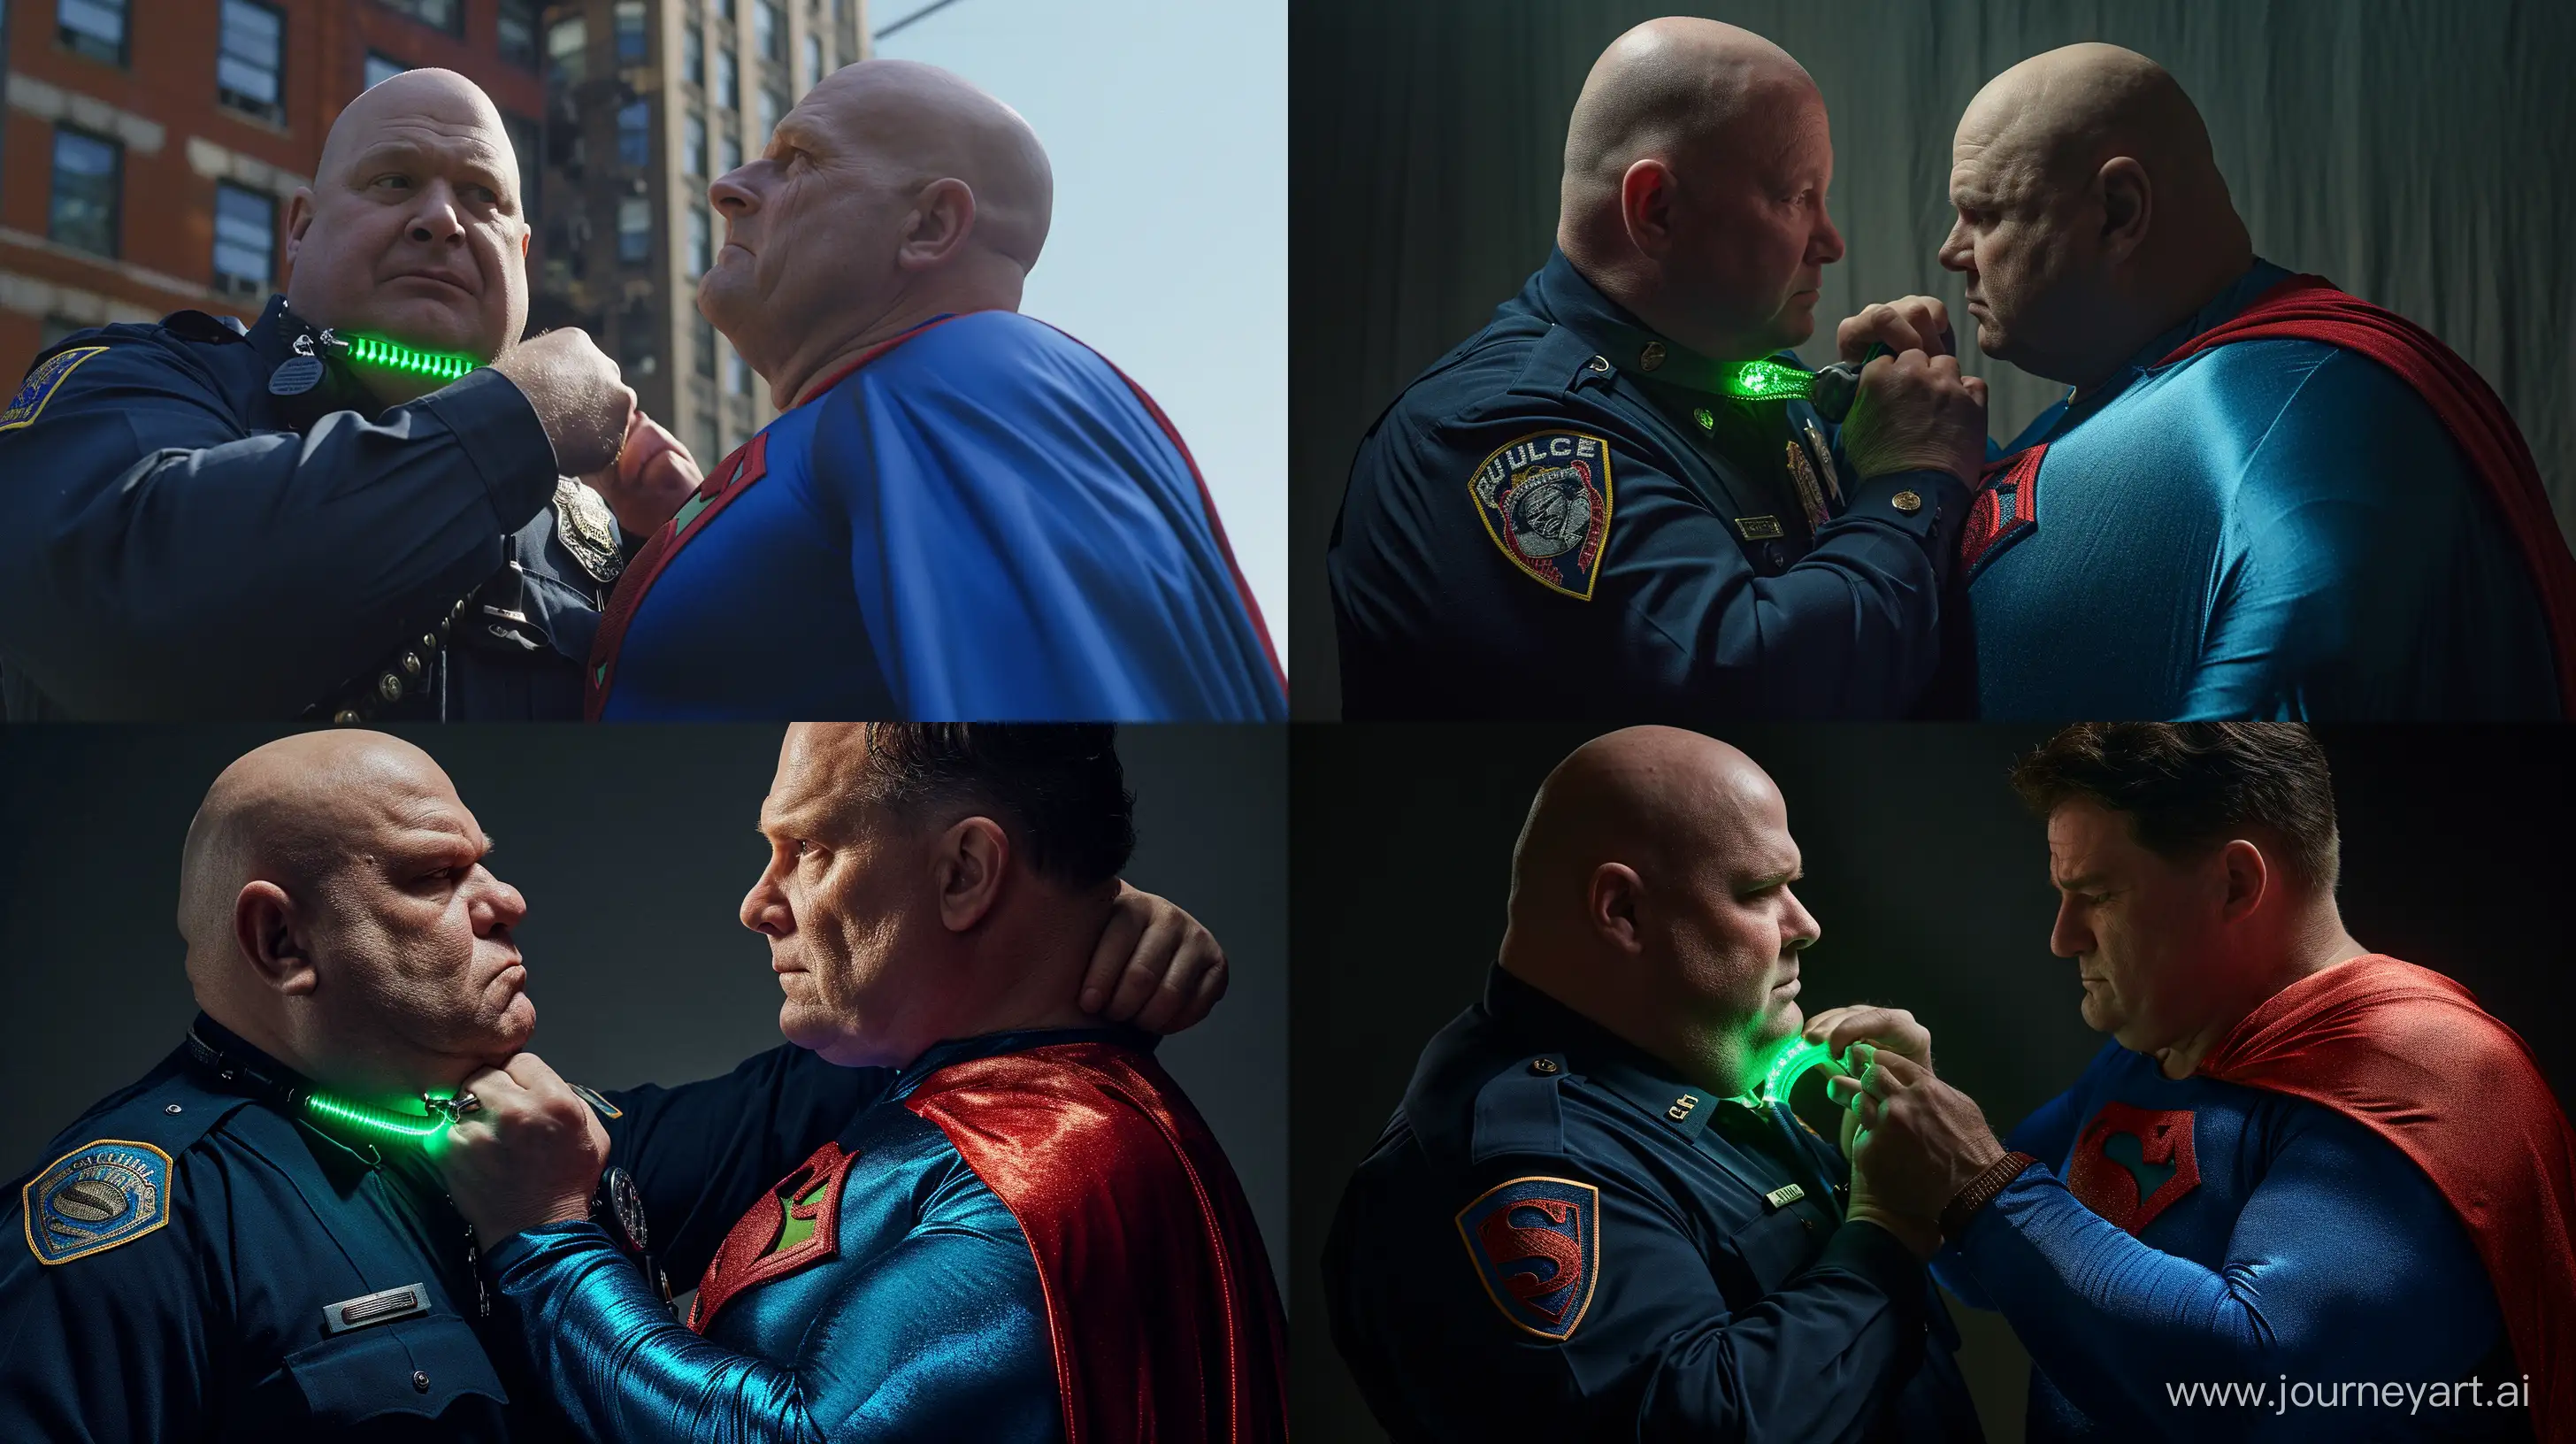 Chubby-Policeman-Fastening-Glowing-Dog-Collar-on-Superman